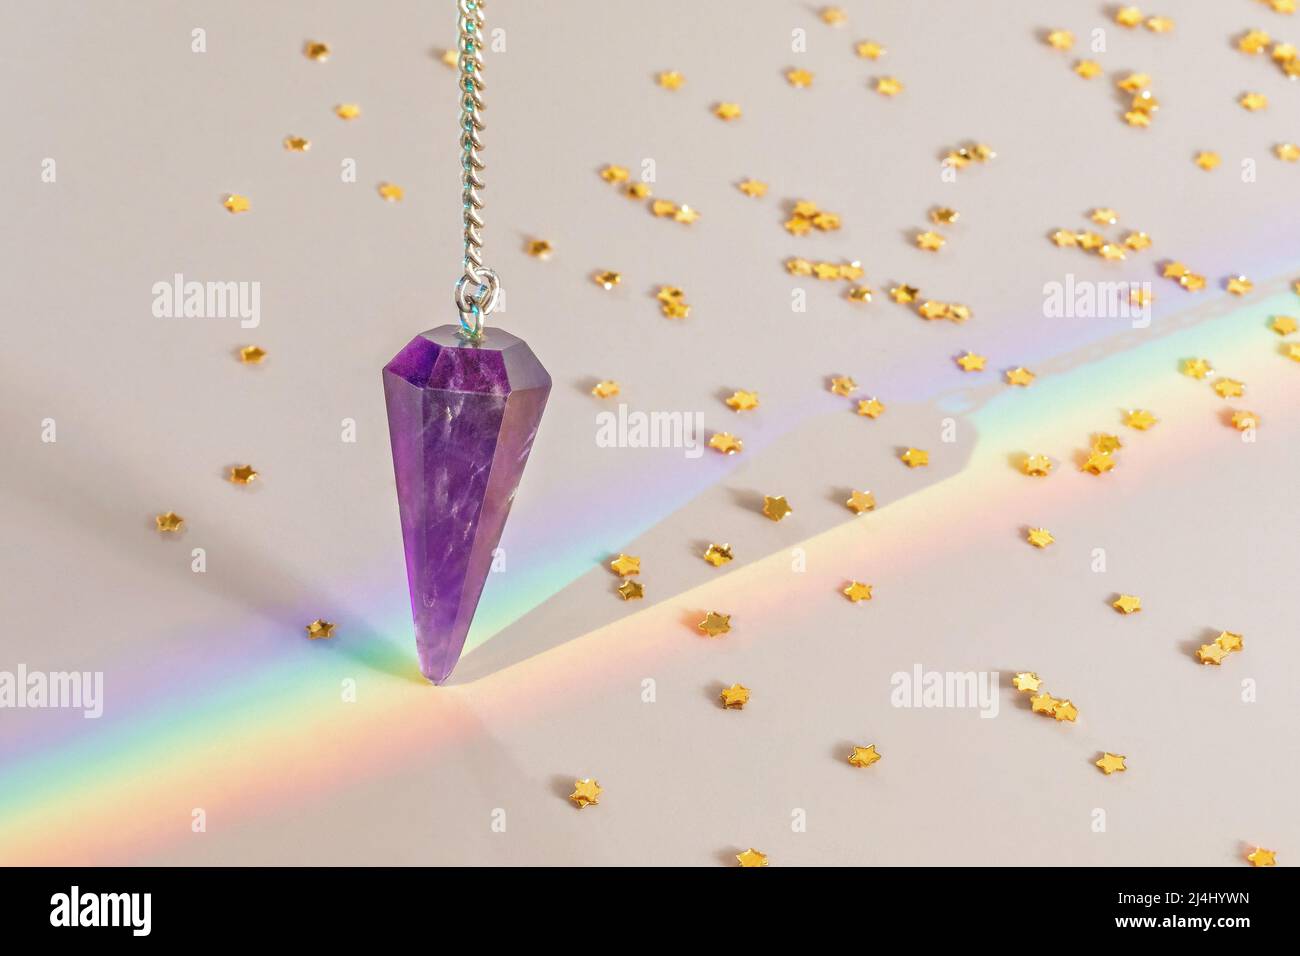 Amethyst pendulum over rainbow Stock Photo